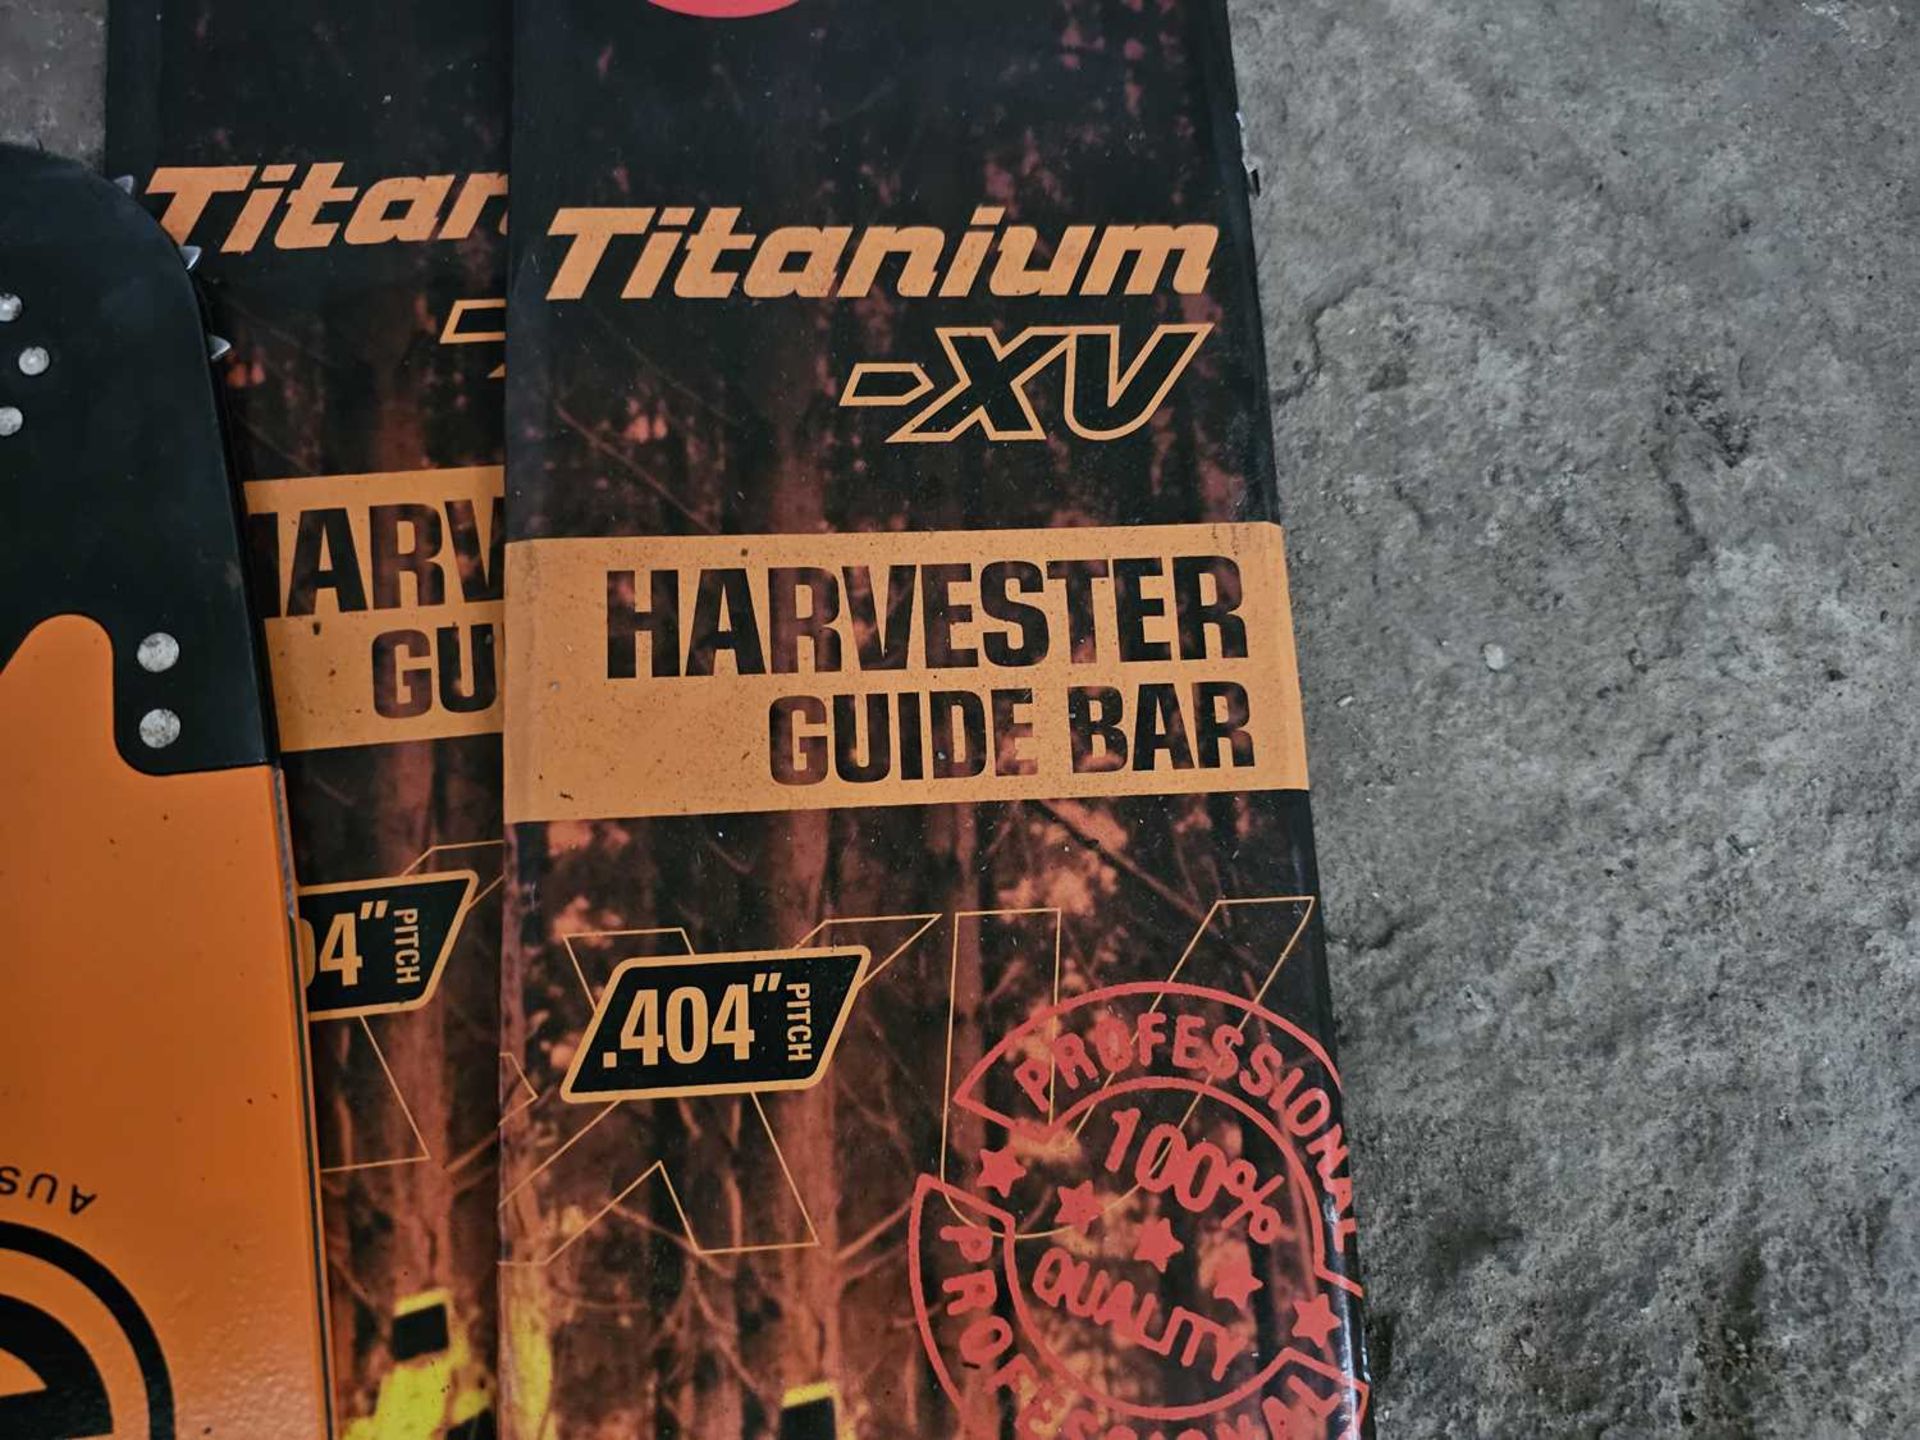 Unused Titanium-XV 29" Harvester Guide Bar, .404" Pitch (2 of) - Image 3 of 3